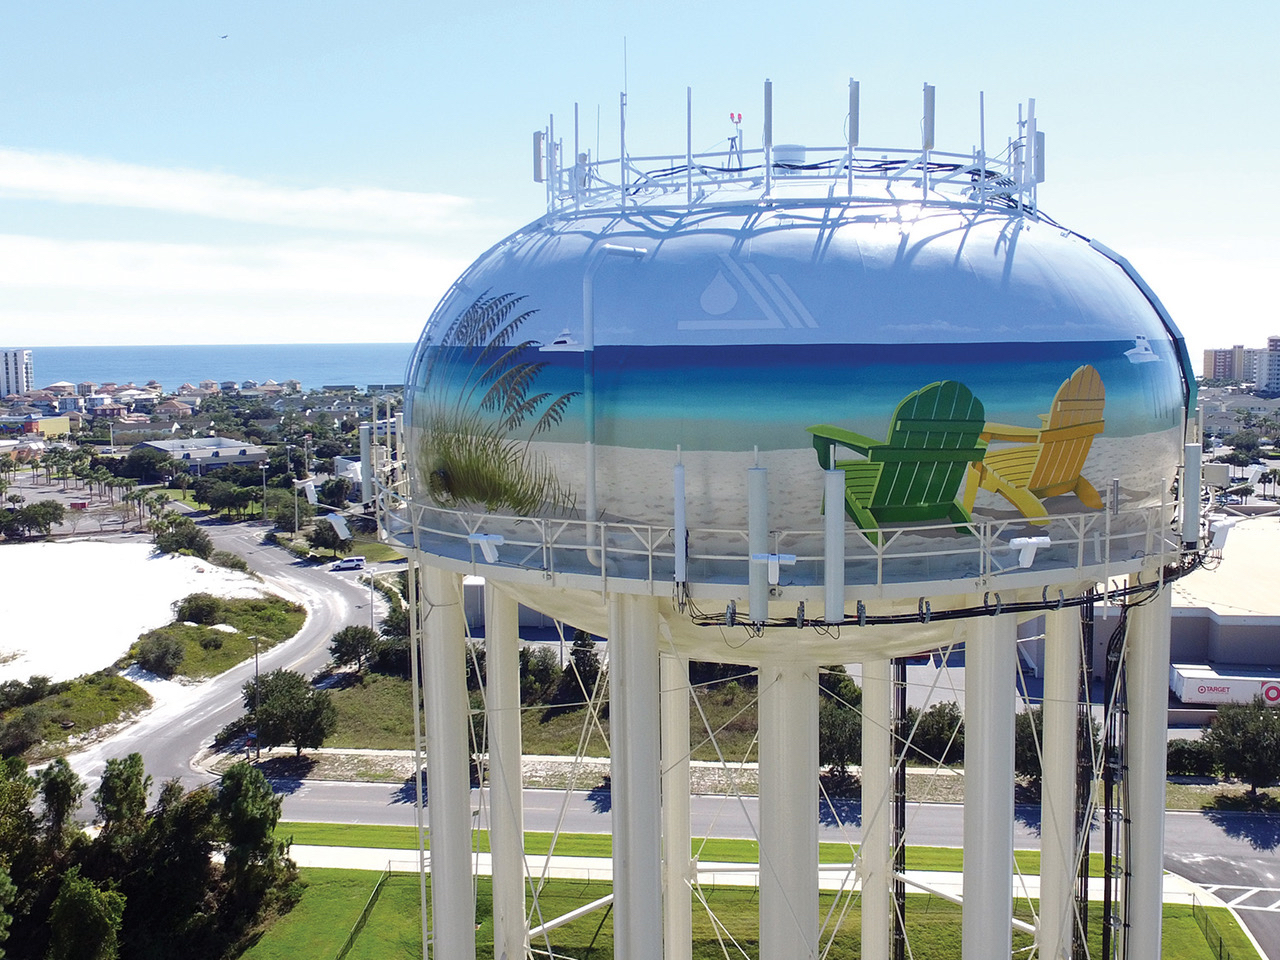 Last year’s winning entry in Destin, Florida, was a 500,000-gallon legged tank that featured a beach scene by muralist Eric Henn.